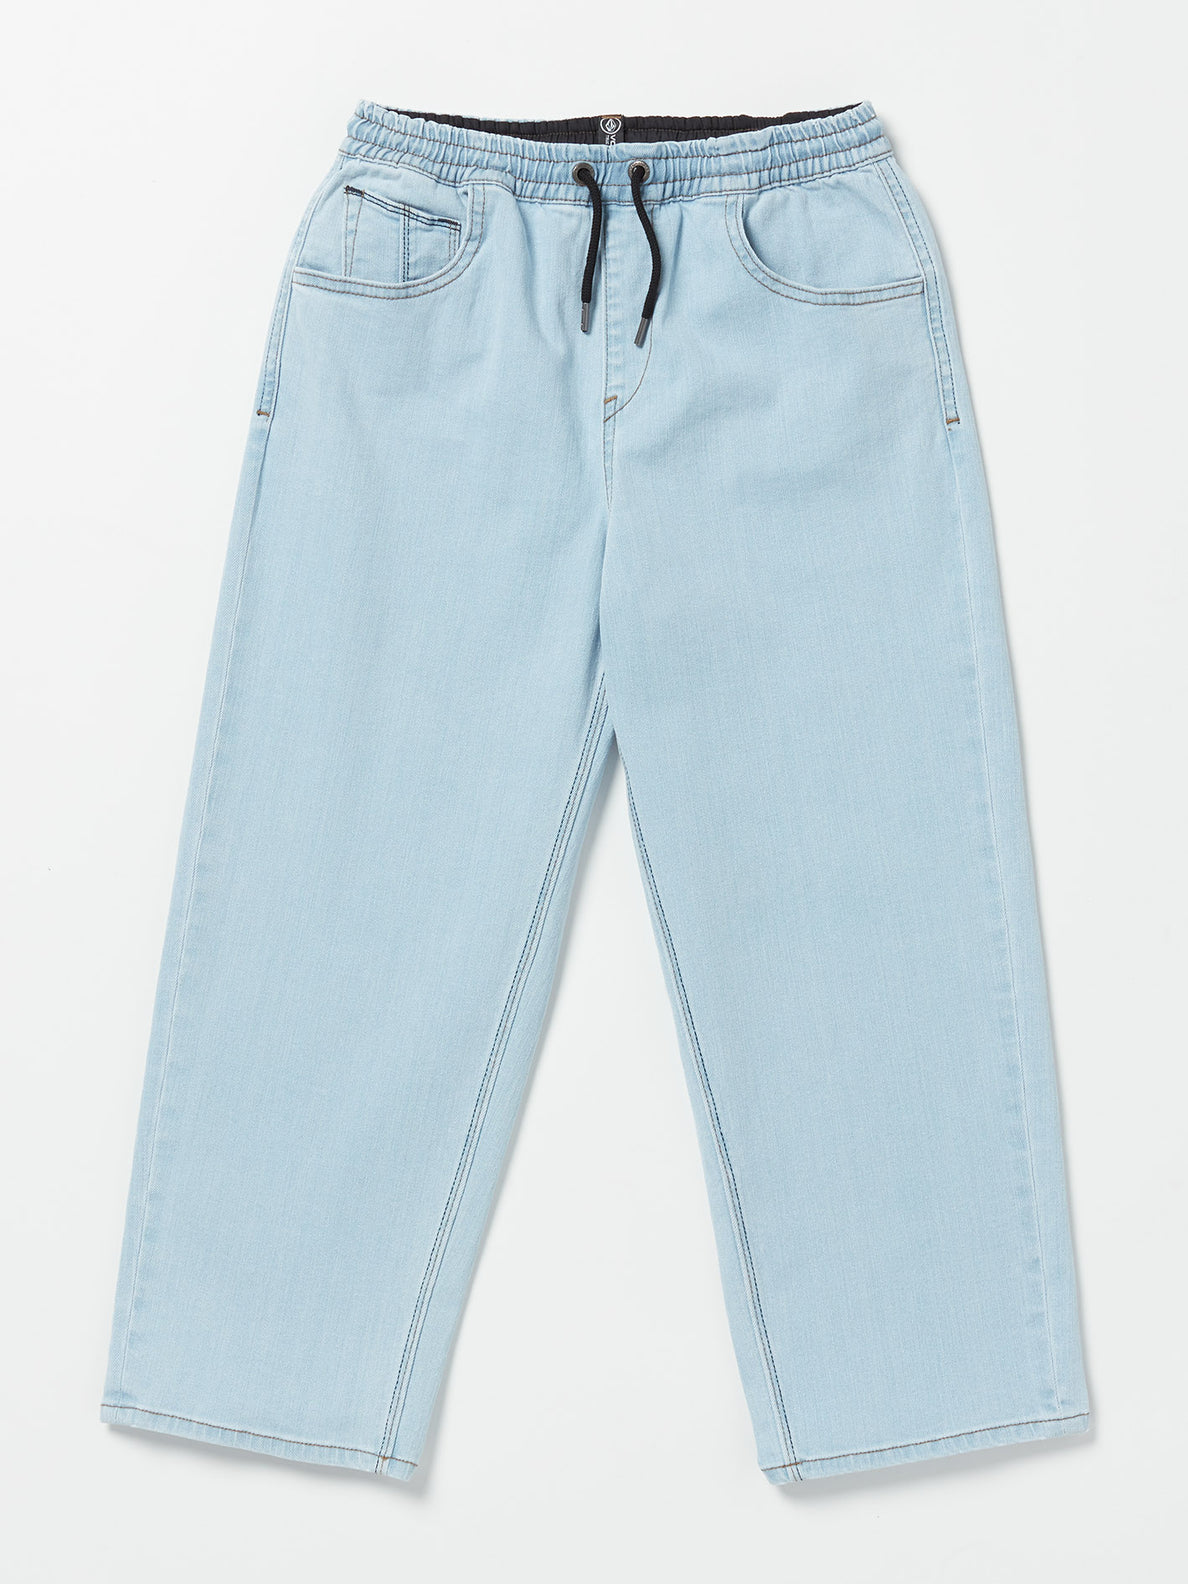 Women's Denim Dungarees shorts Hot Pant Jeans UK 6-14